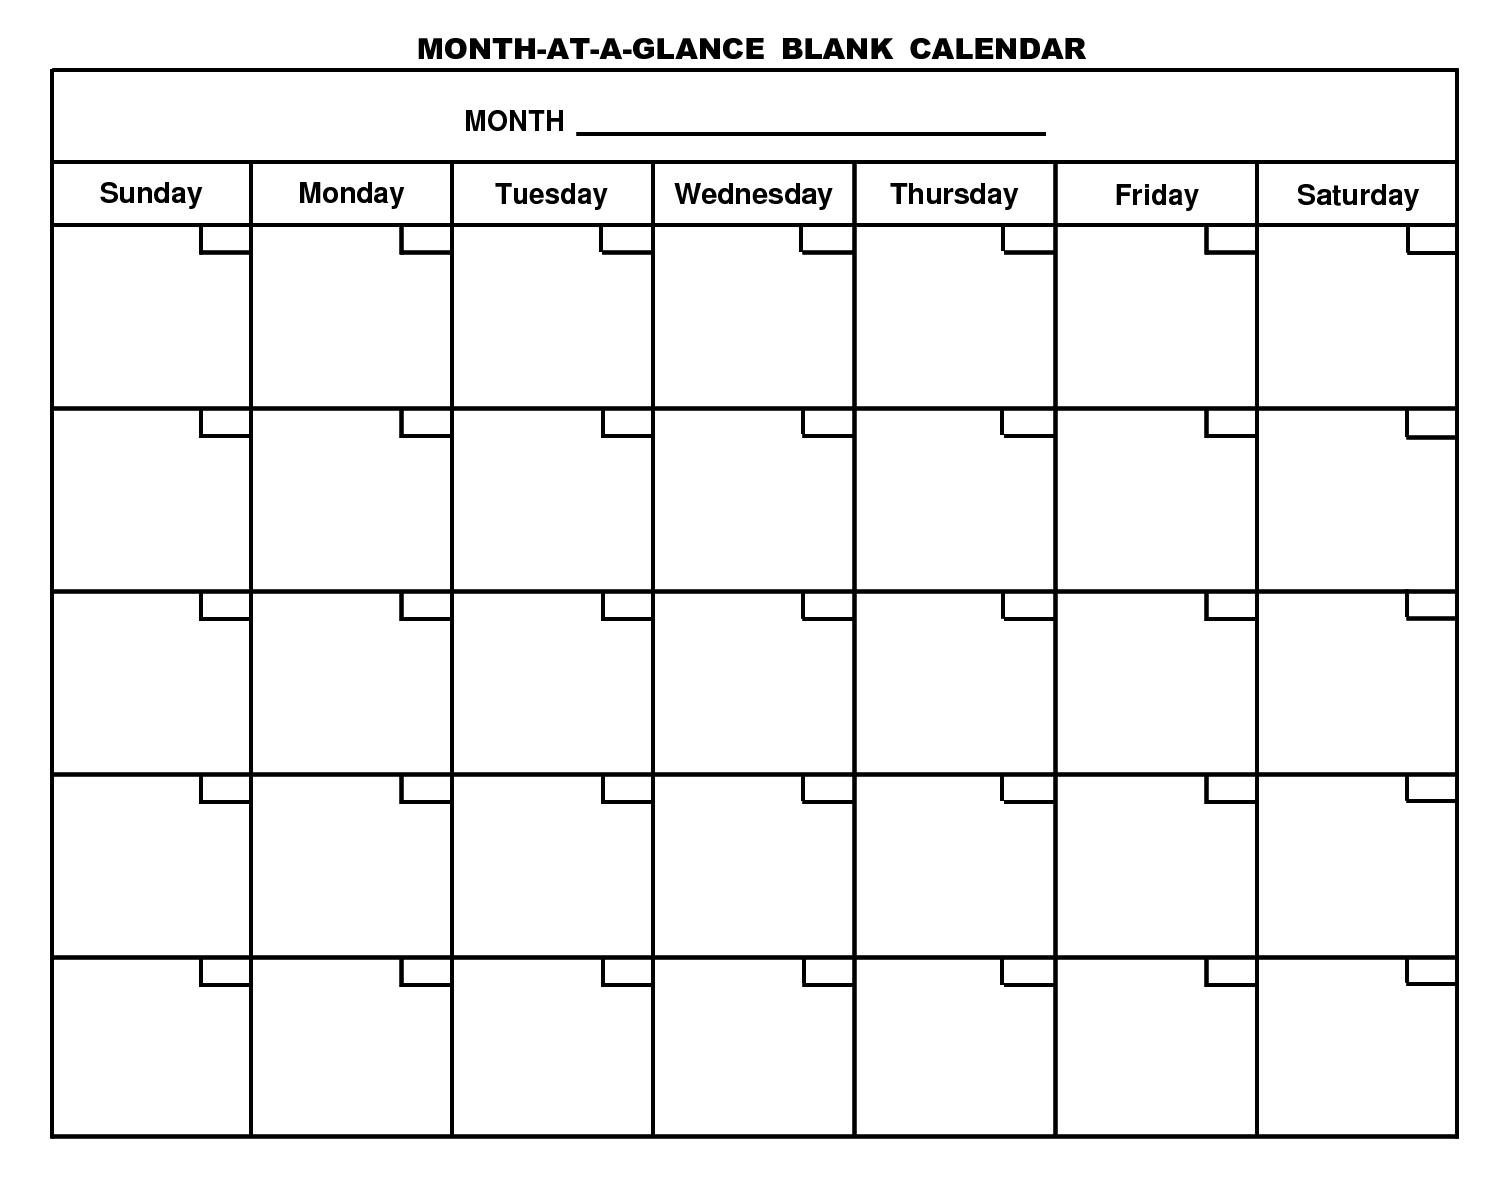 Calendar Template To Print Calendar Month Printable Inside For Month At A Glance Blank Calendar Template